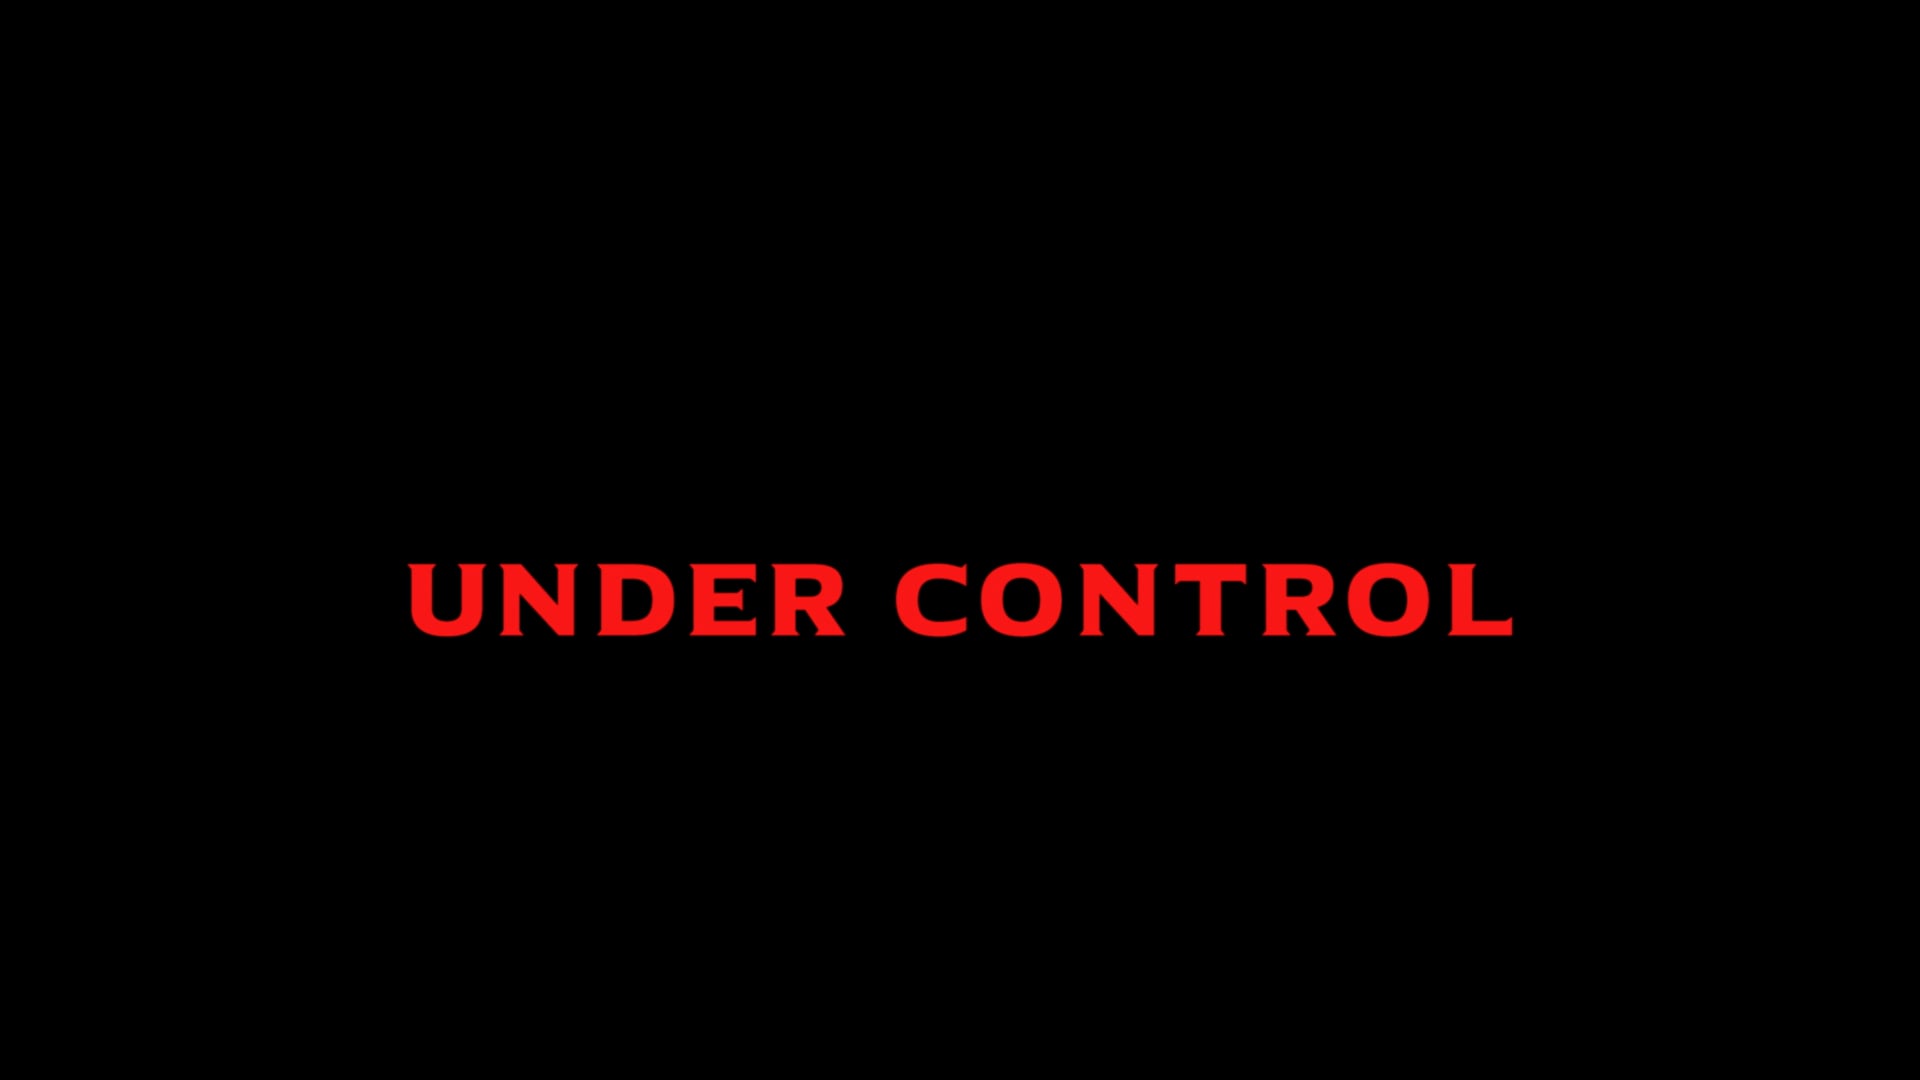 Vidéo REALISATRICE -TRAILER "Under Control" - V.O subtitle